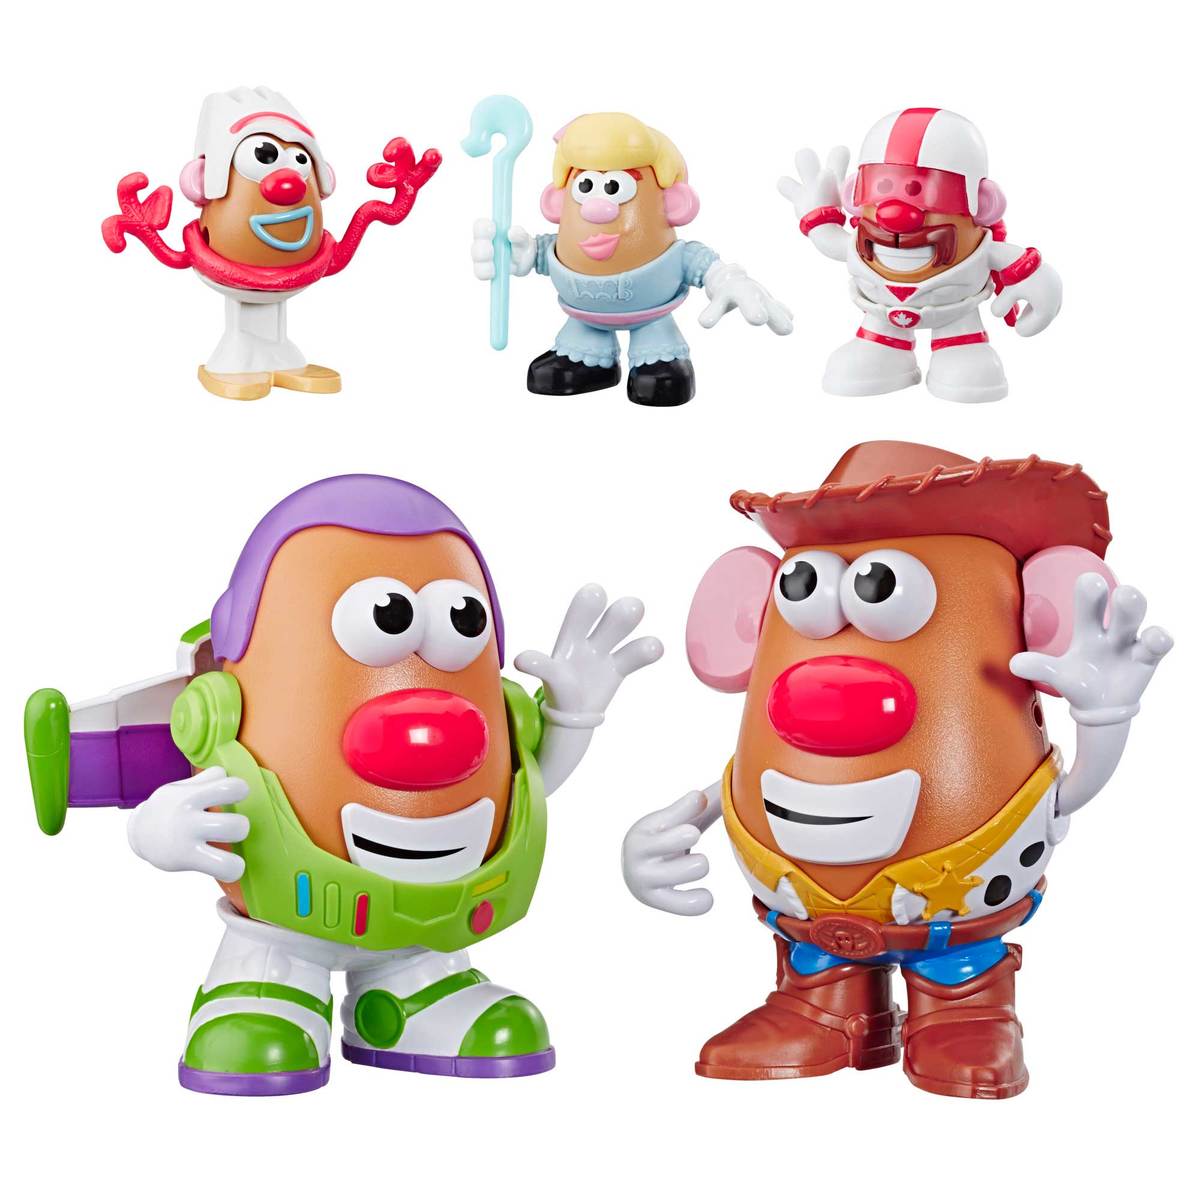 Playskool Disney Pixar Toy Story 4 Mr Potato Head The Entertainer